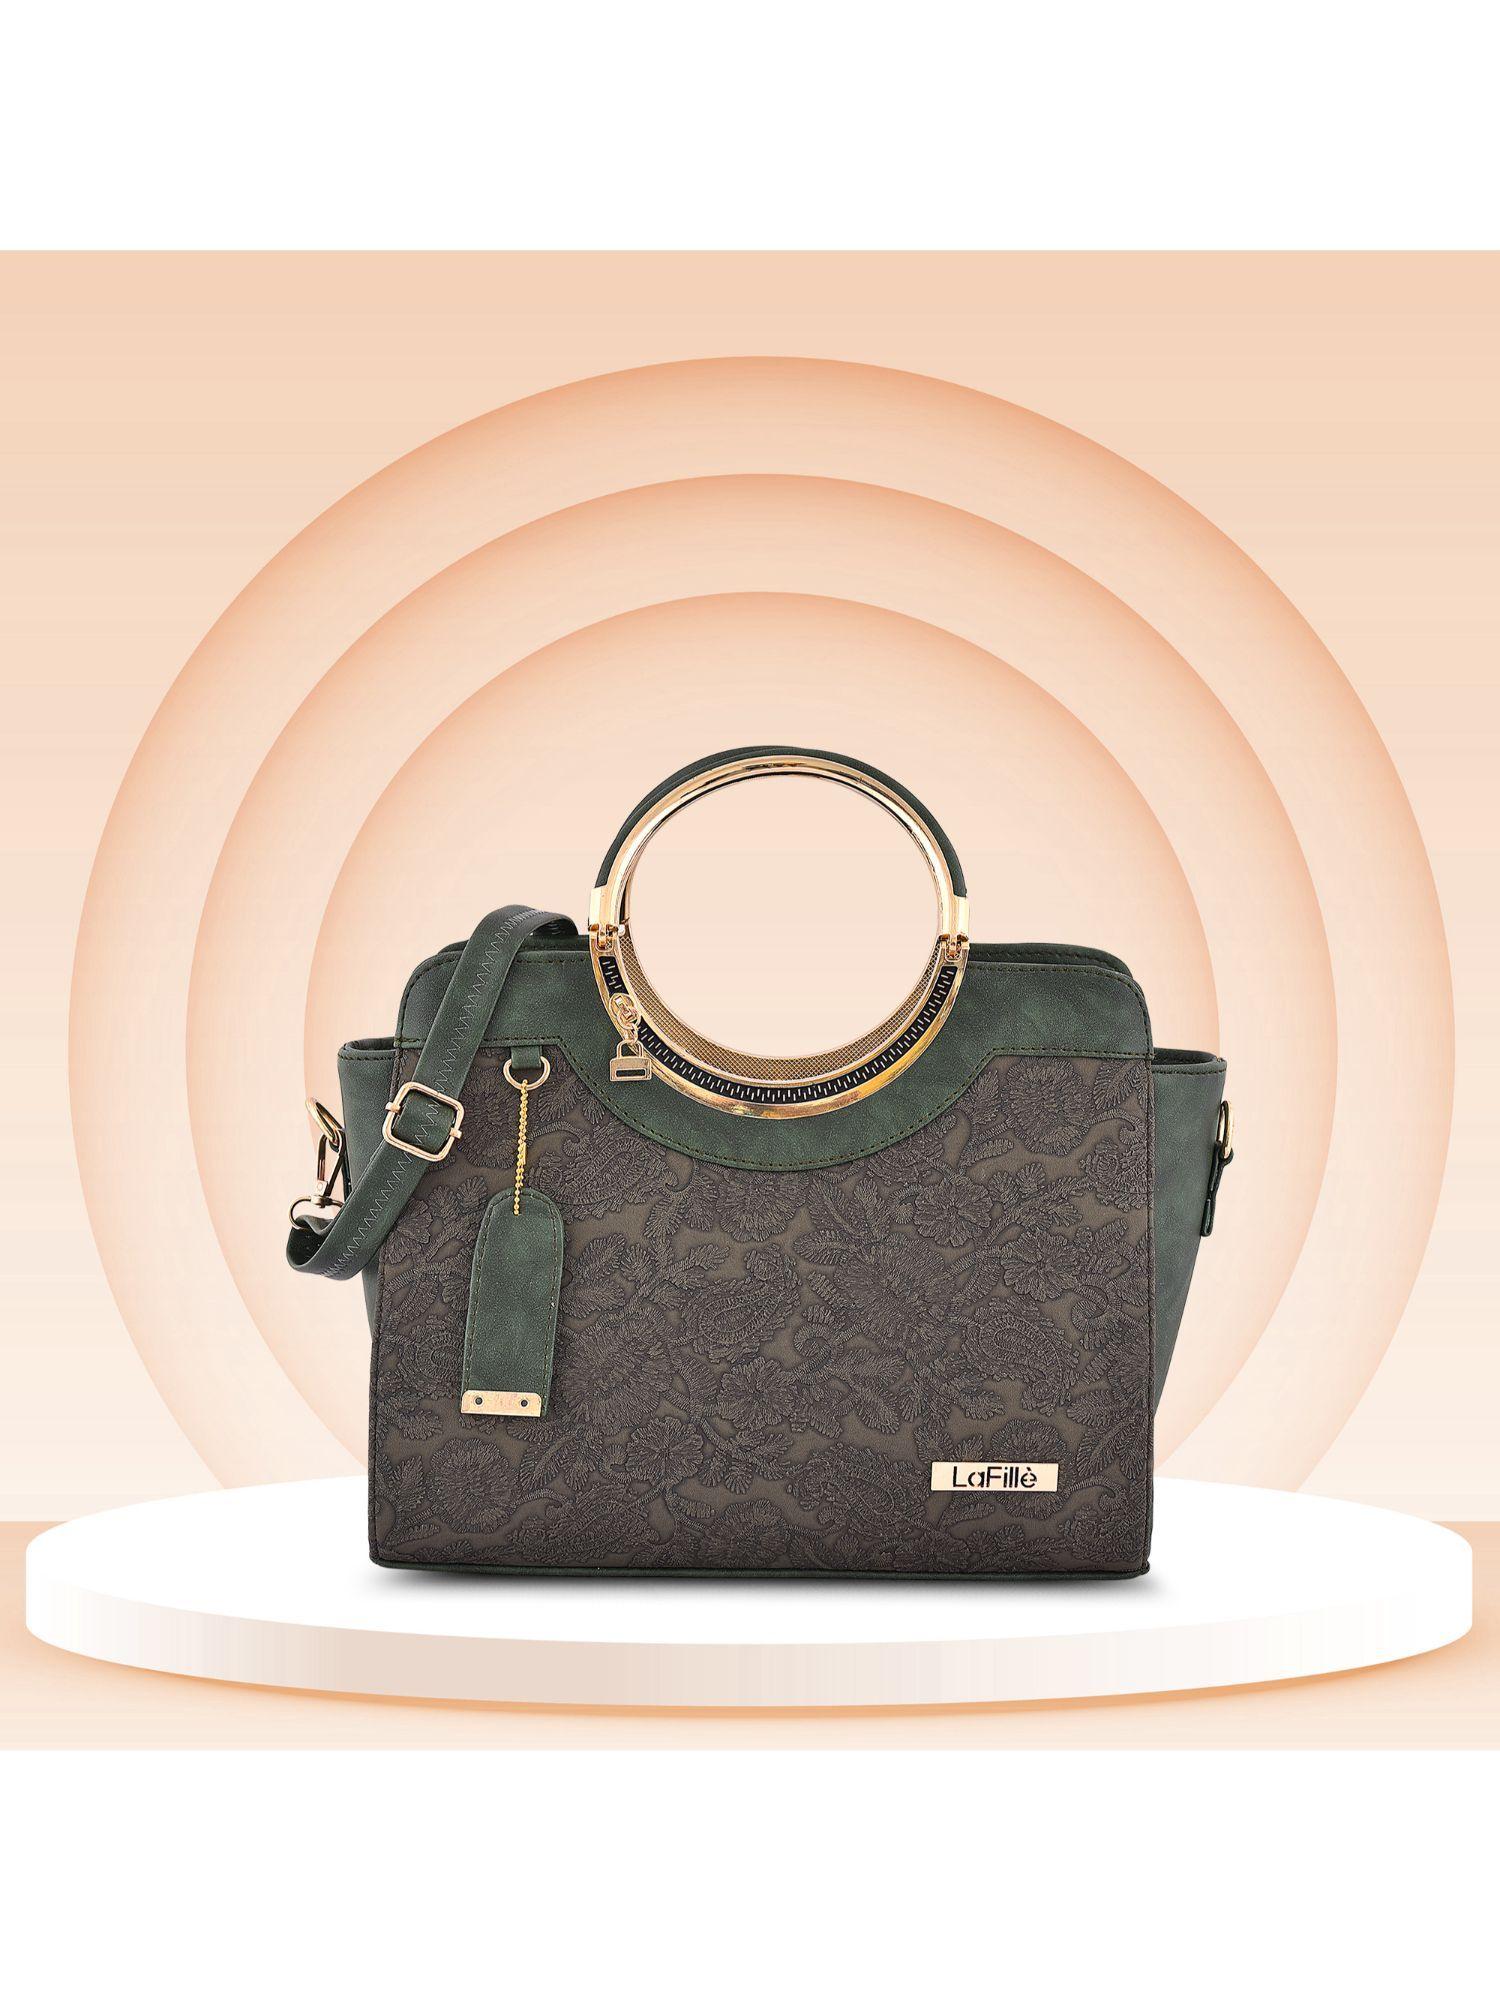 dgn308 womens handbag with adjustable sling strap - dark green